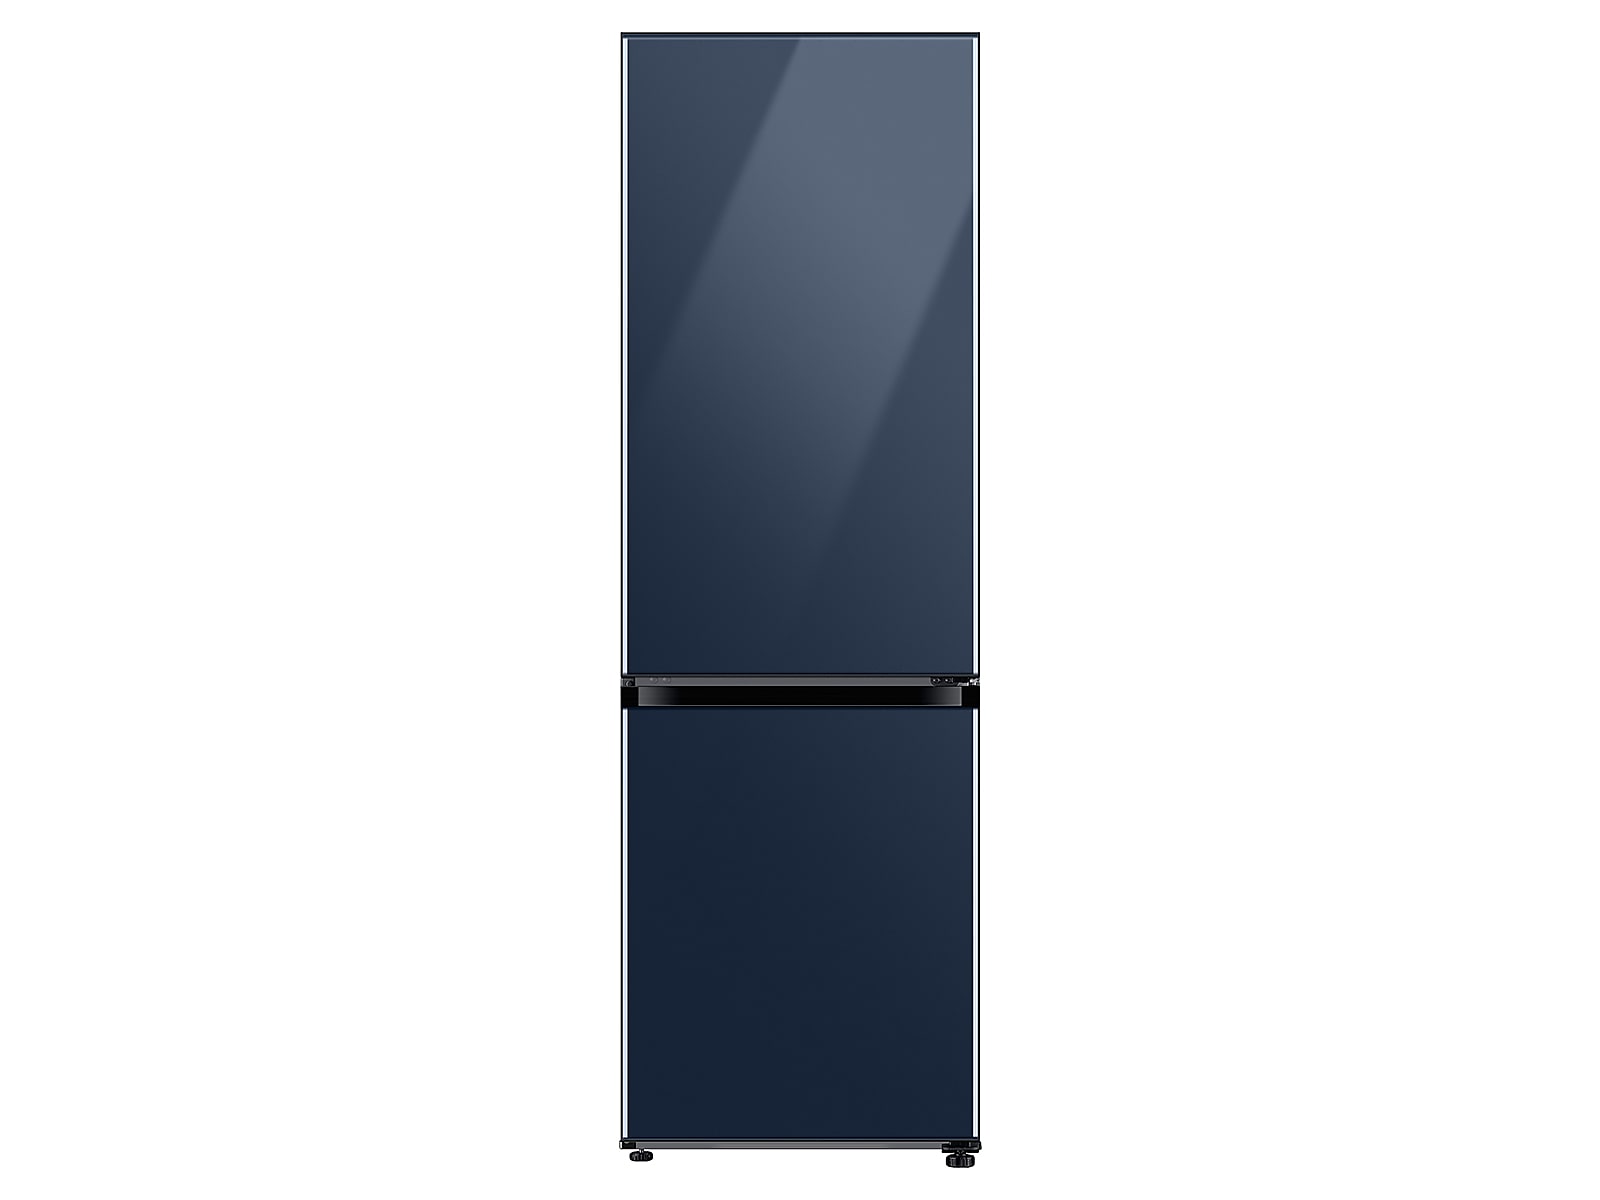 Samsung 12.0 cu. Ft. Bespoke Bottom Freezer Refrigerator with Flexible Design in Navy Blue Glass(RB12A300641/AA)